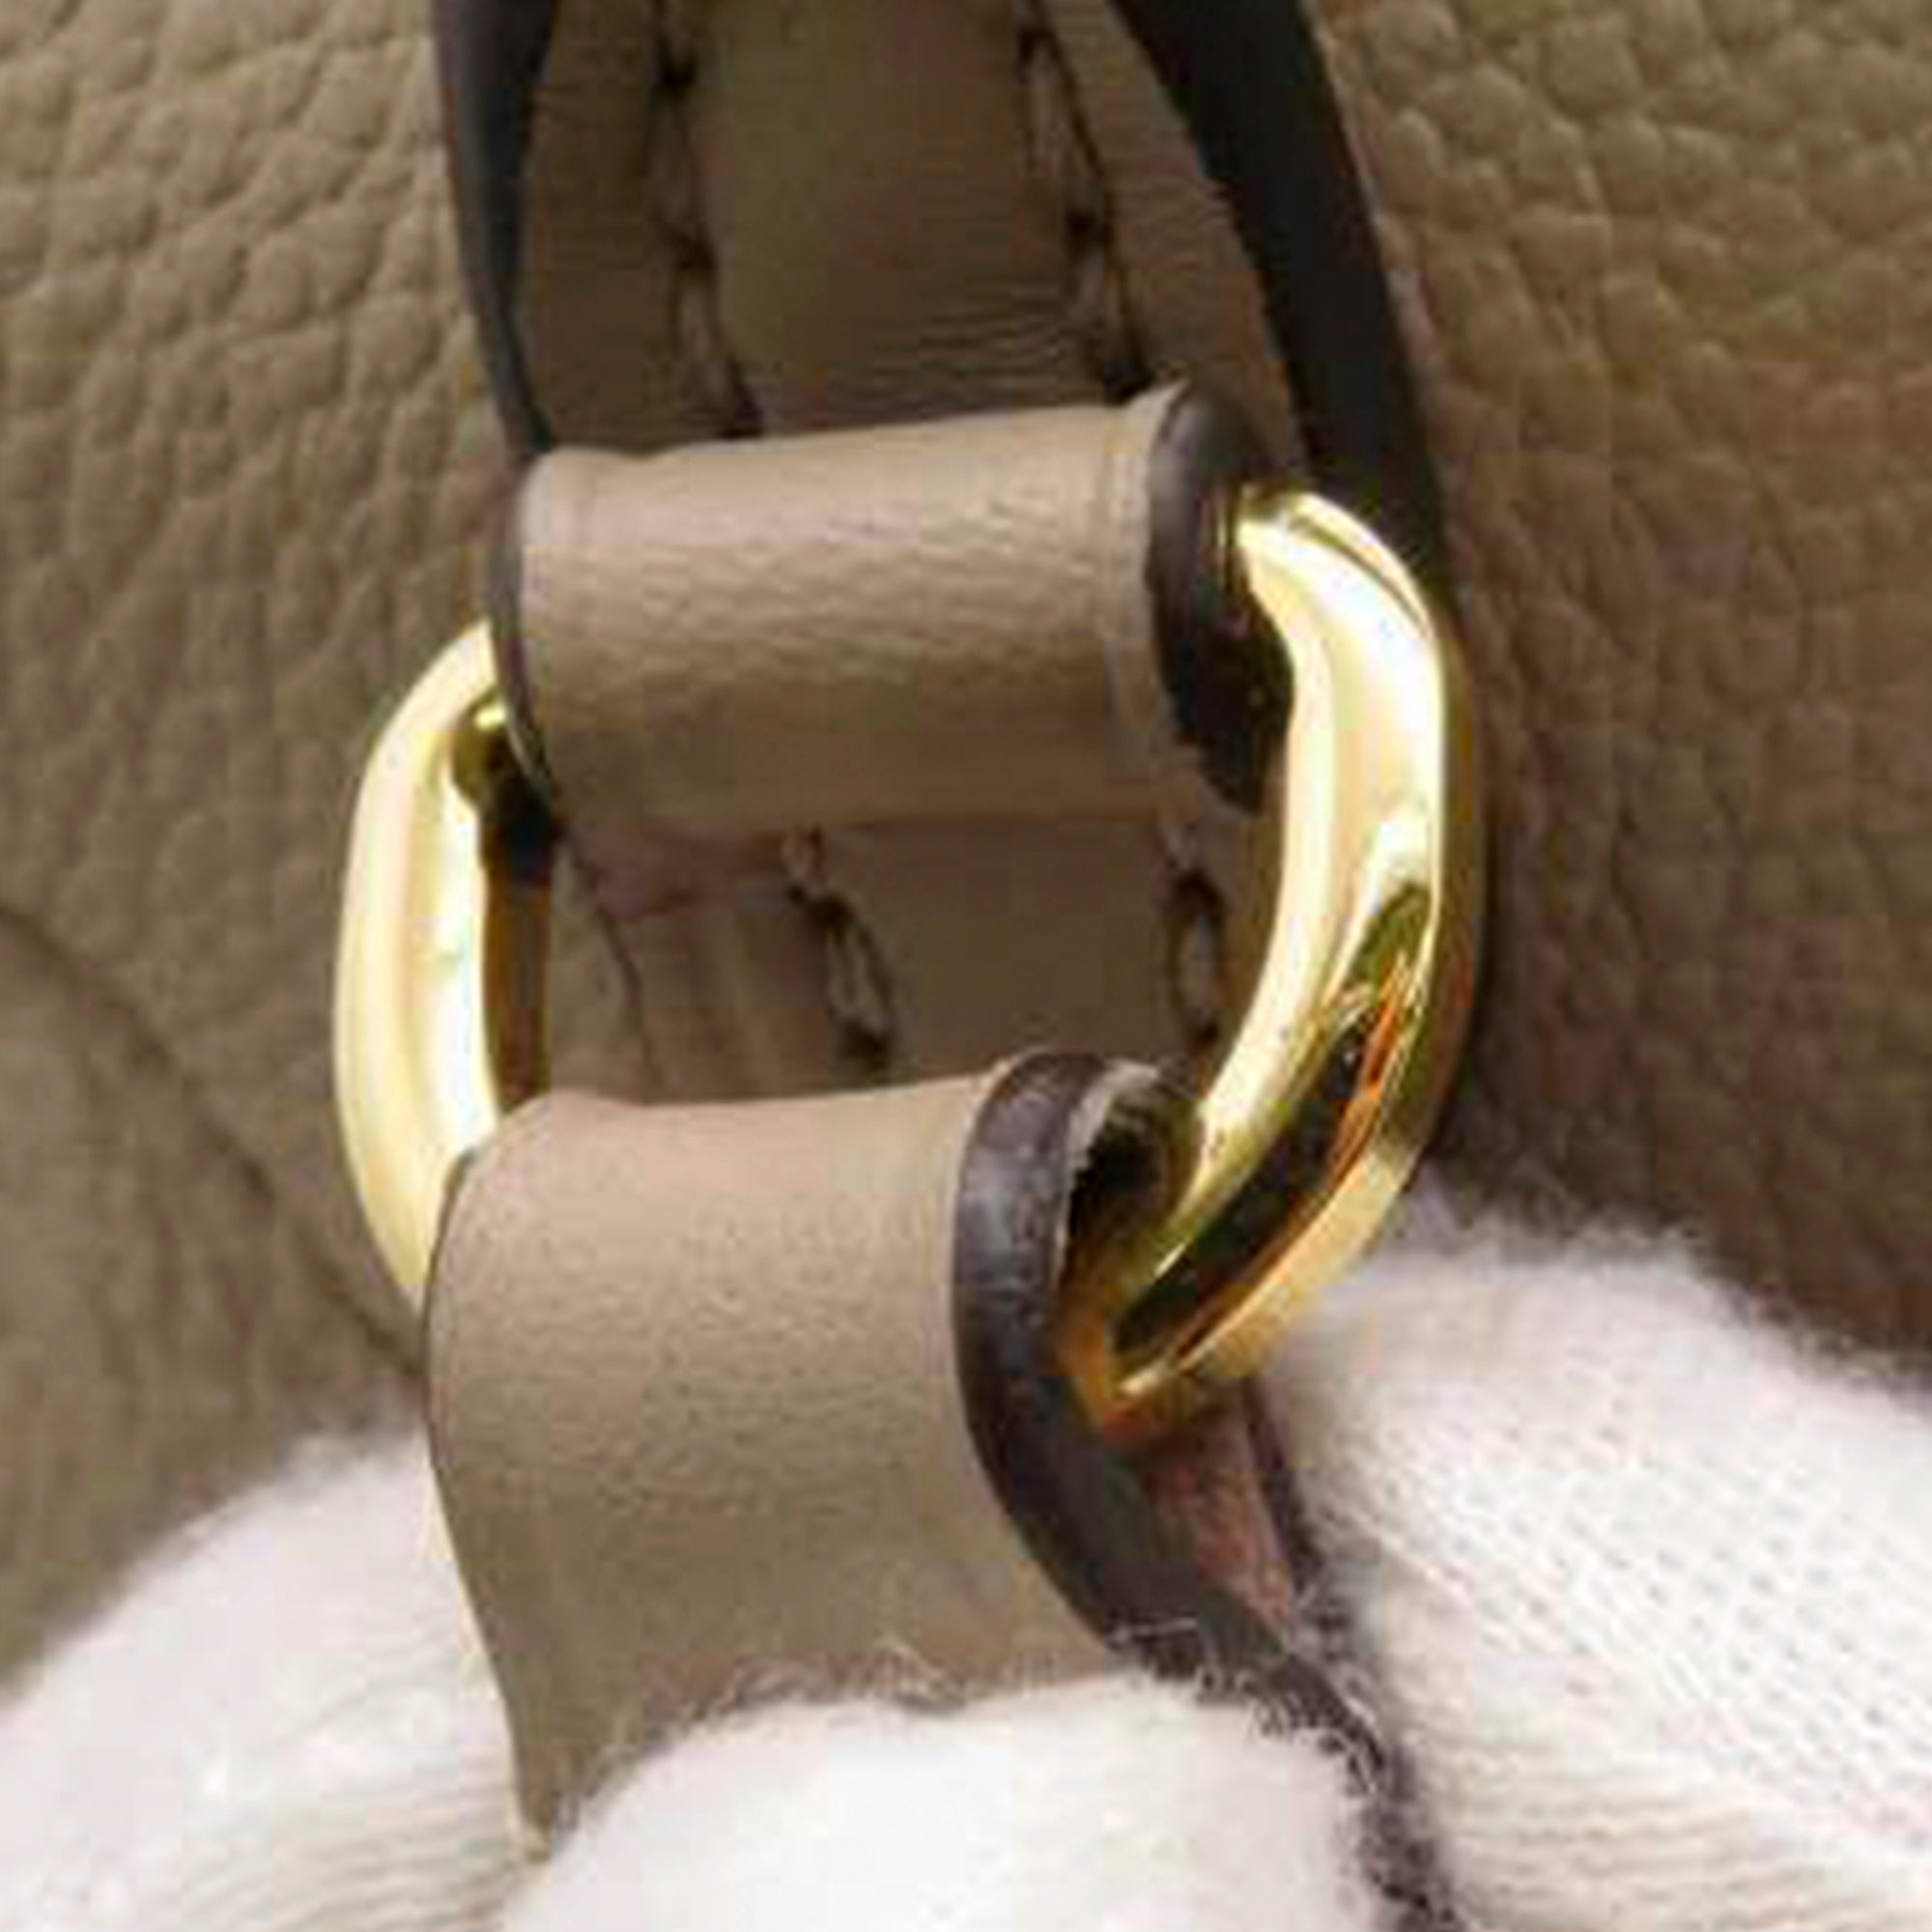 LOUIS VUITTON Louis Vuitton Montsouris MM rucksack daypack * junk